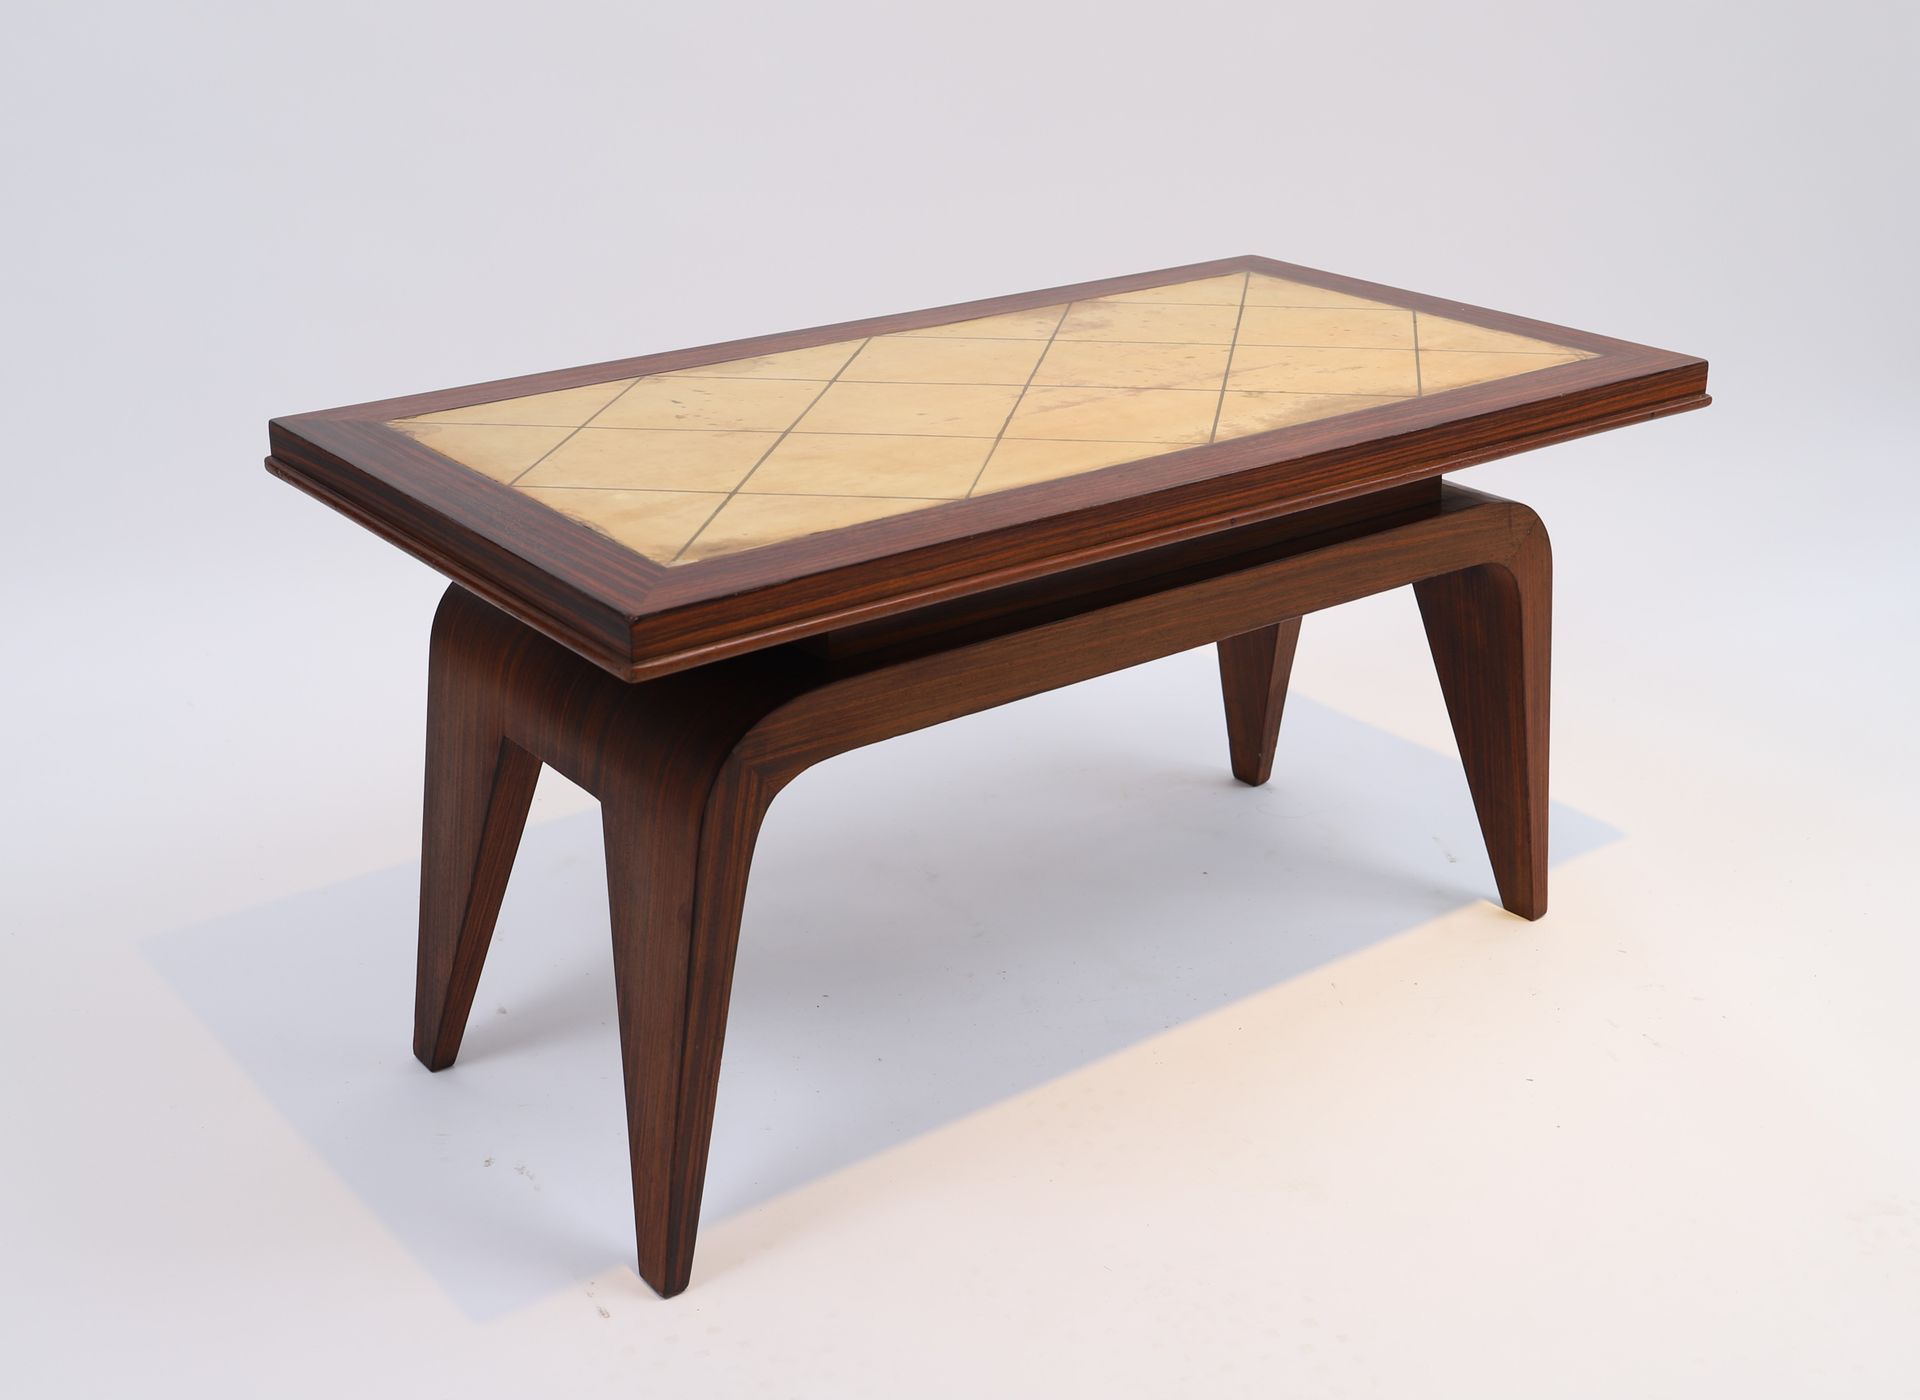 Null Table basse de Christian Krass (1868-1957) - Lyon

En palissandre reposant &hellip;